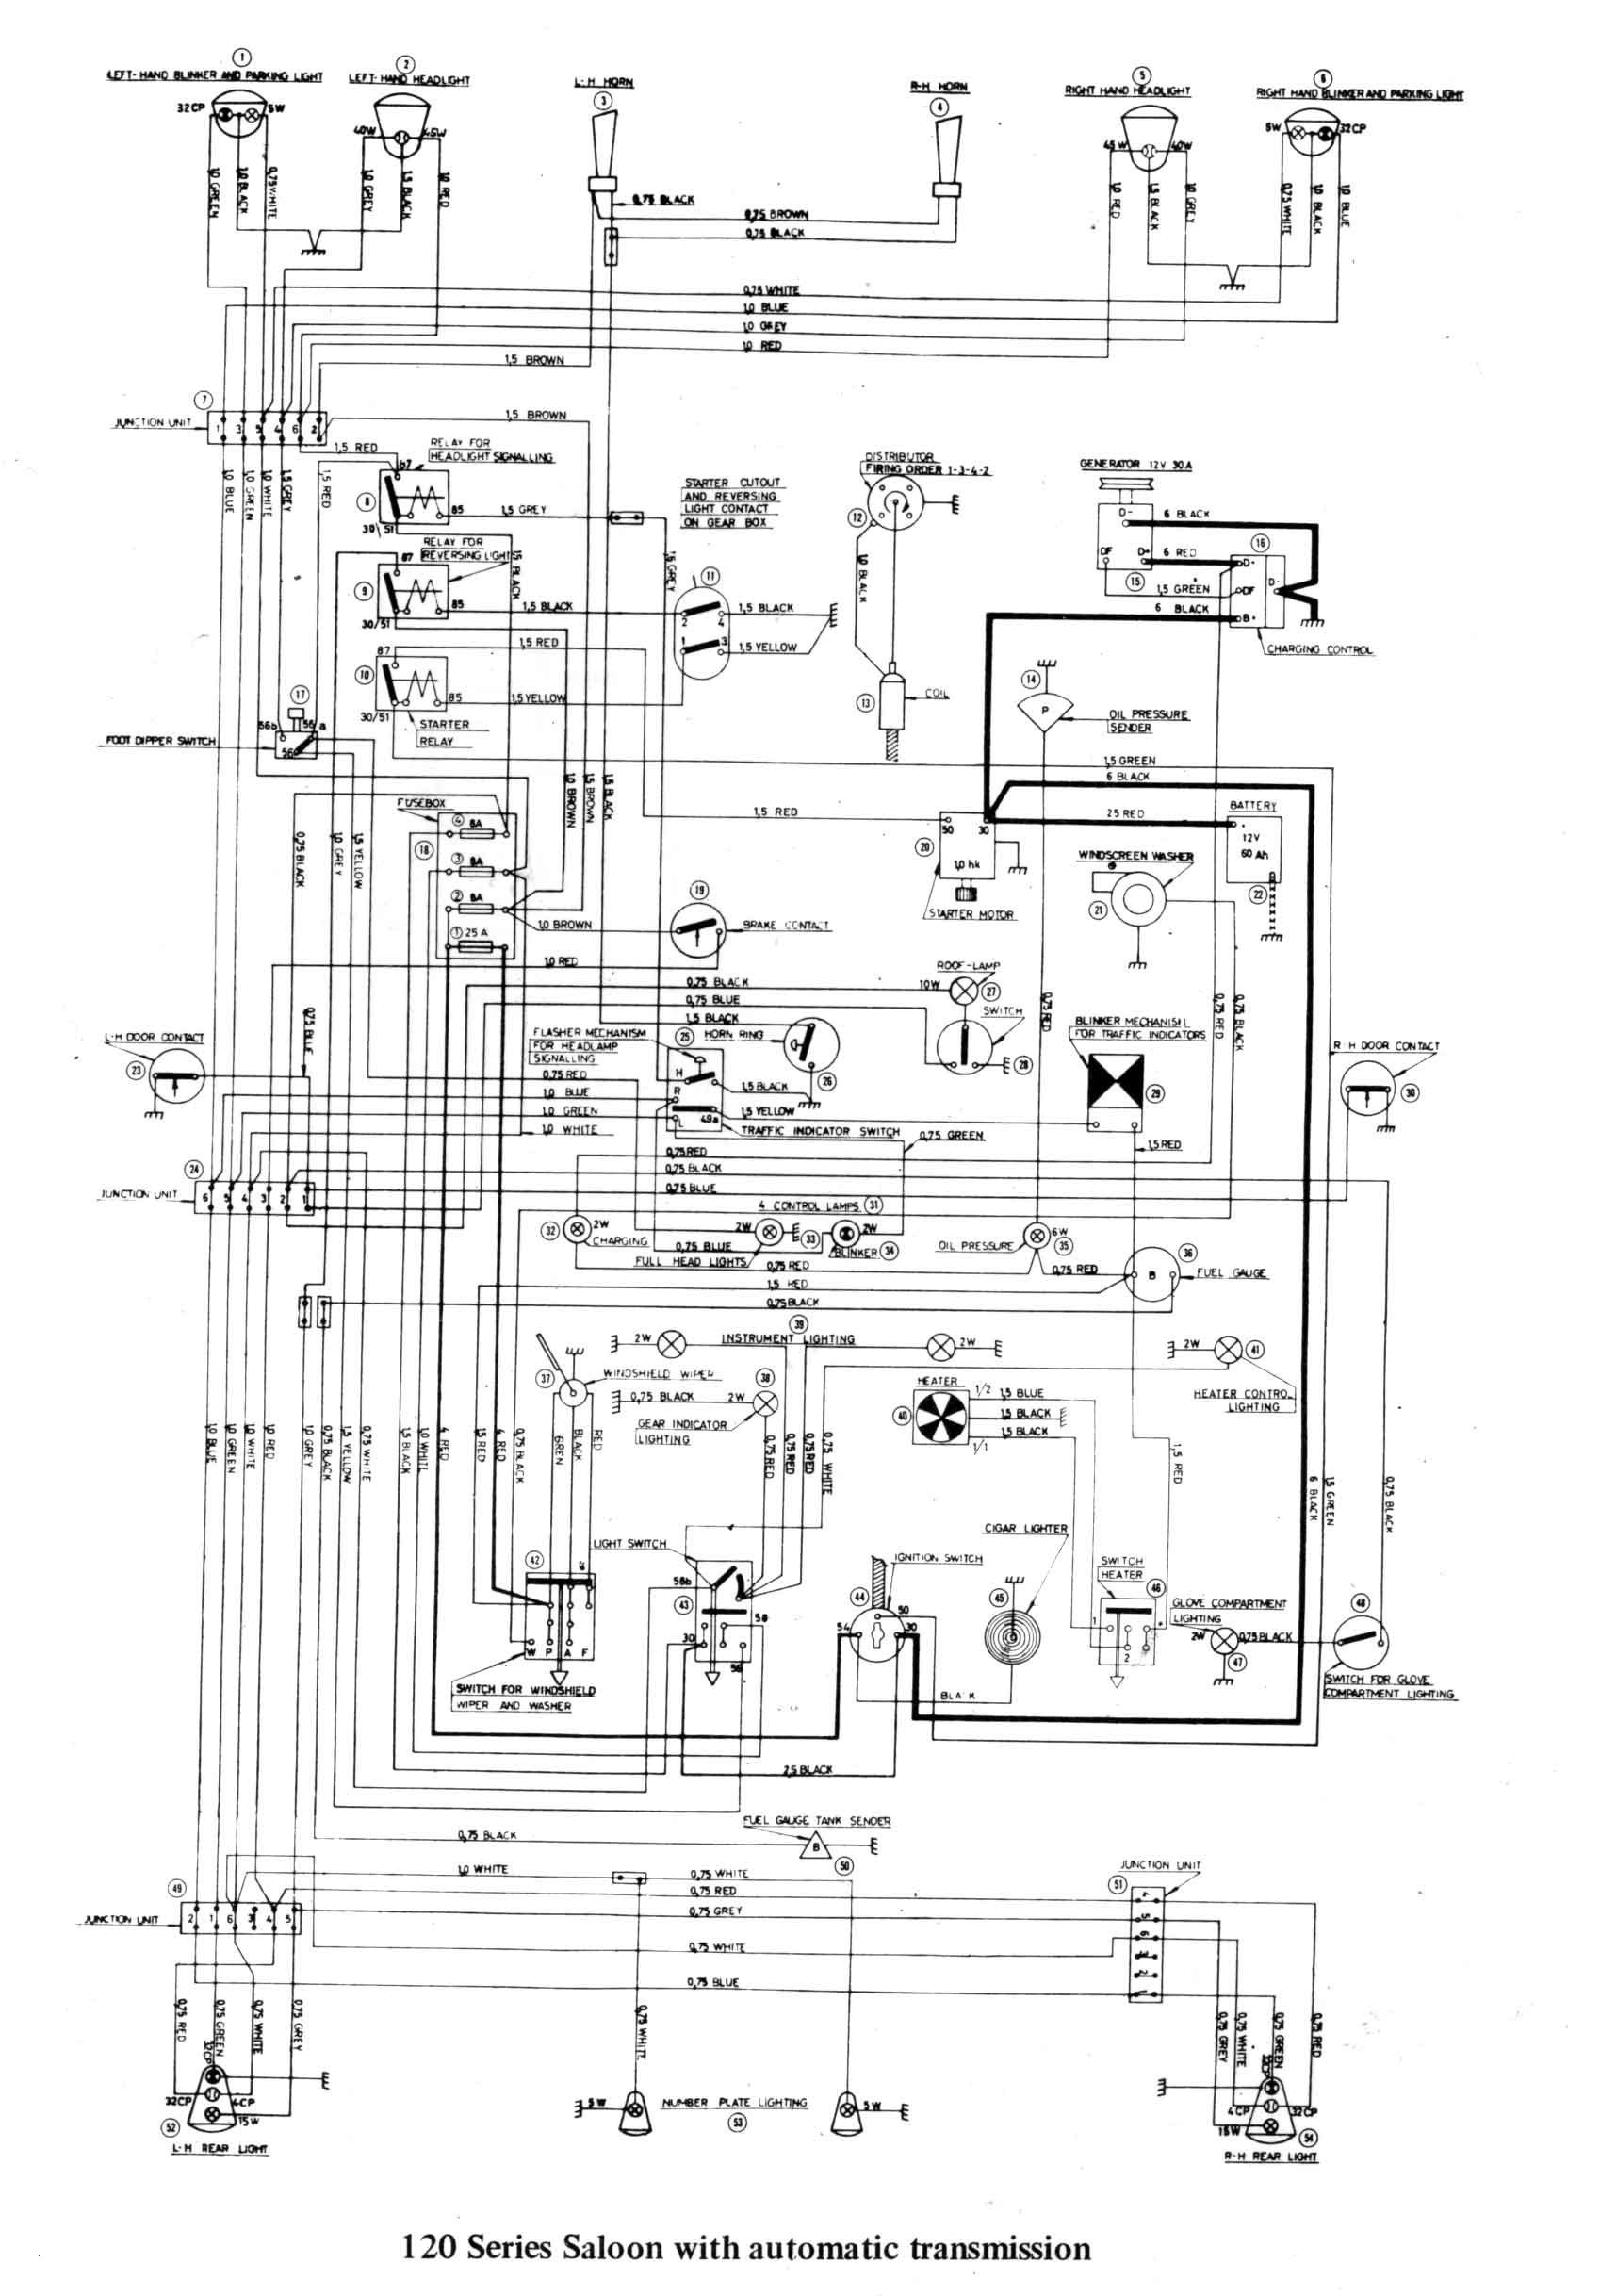 Auto Engine Diagram Automotive Wiring Diagrams Schaferforcongressfo Of Auto Engine Diagram